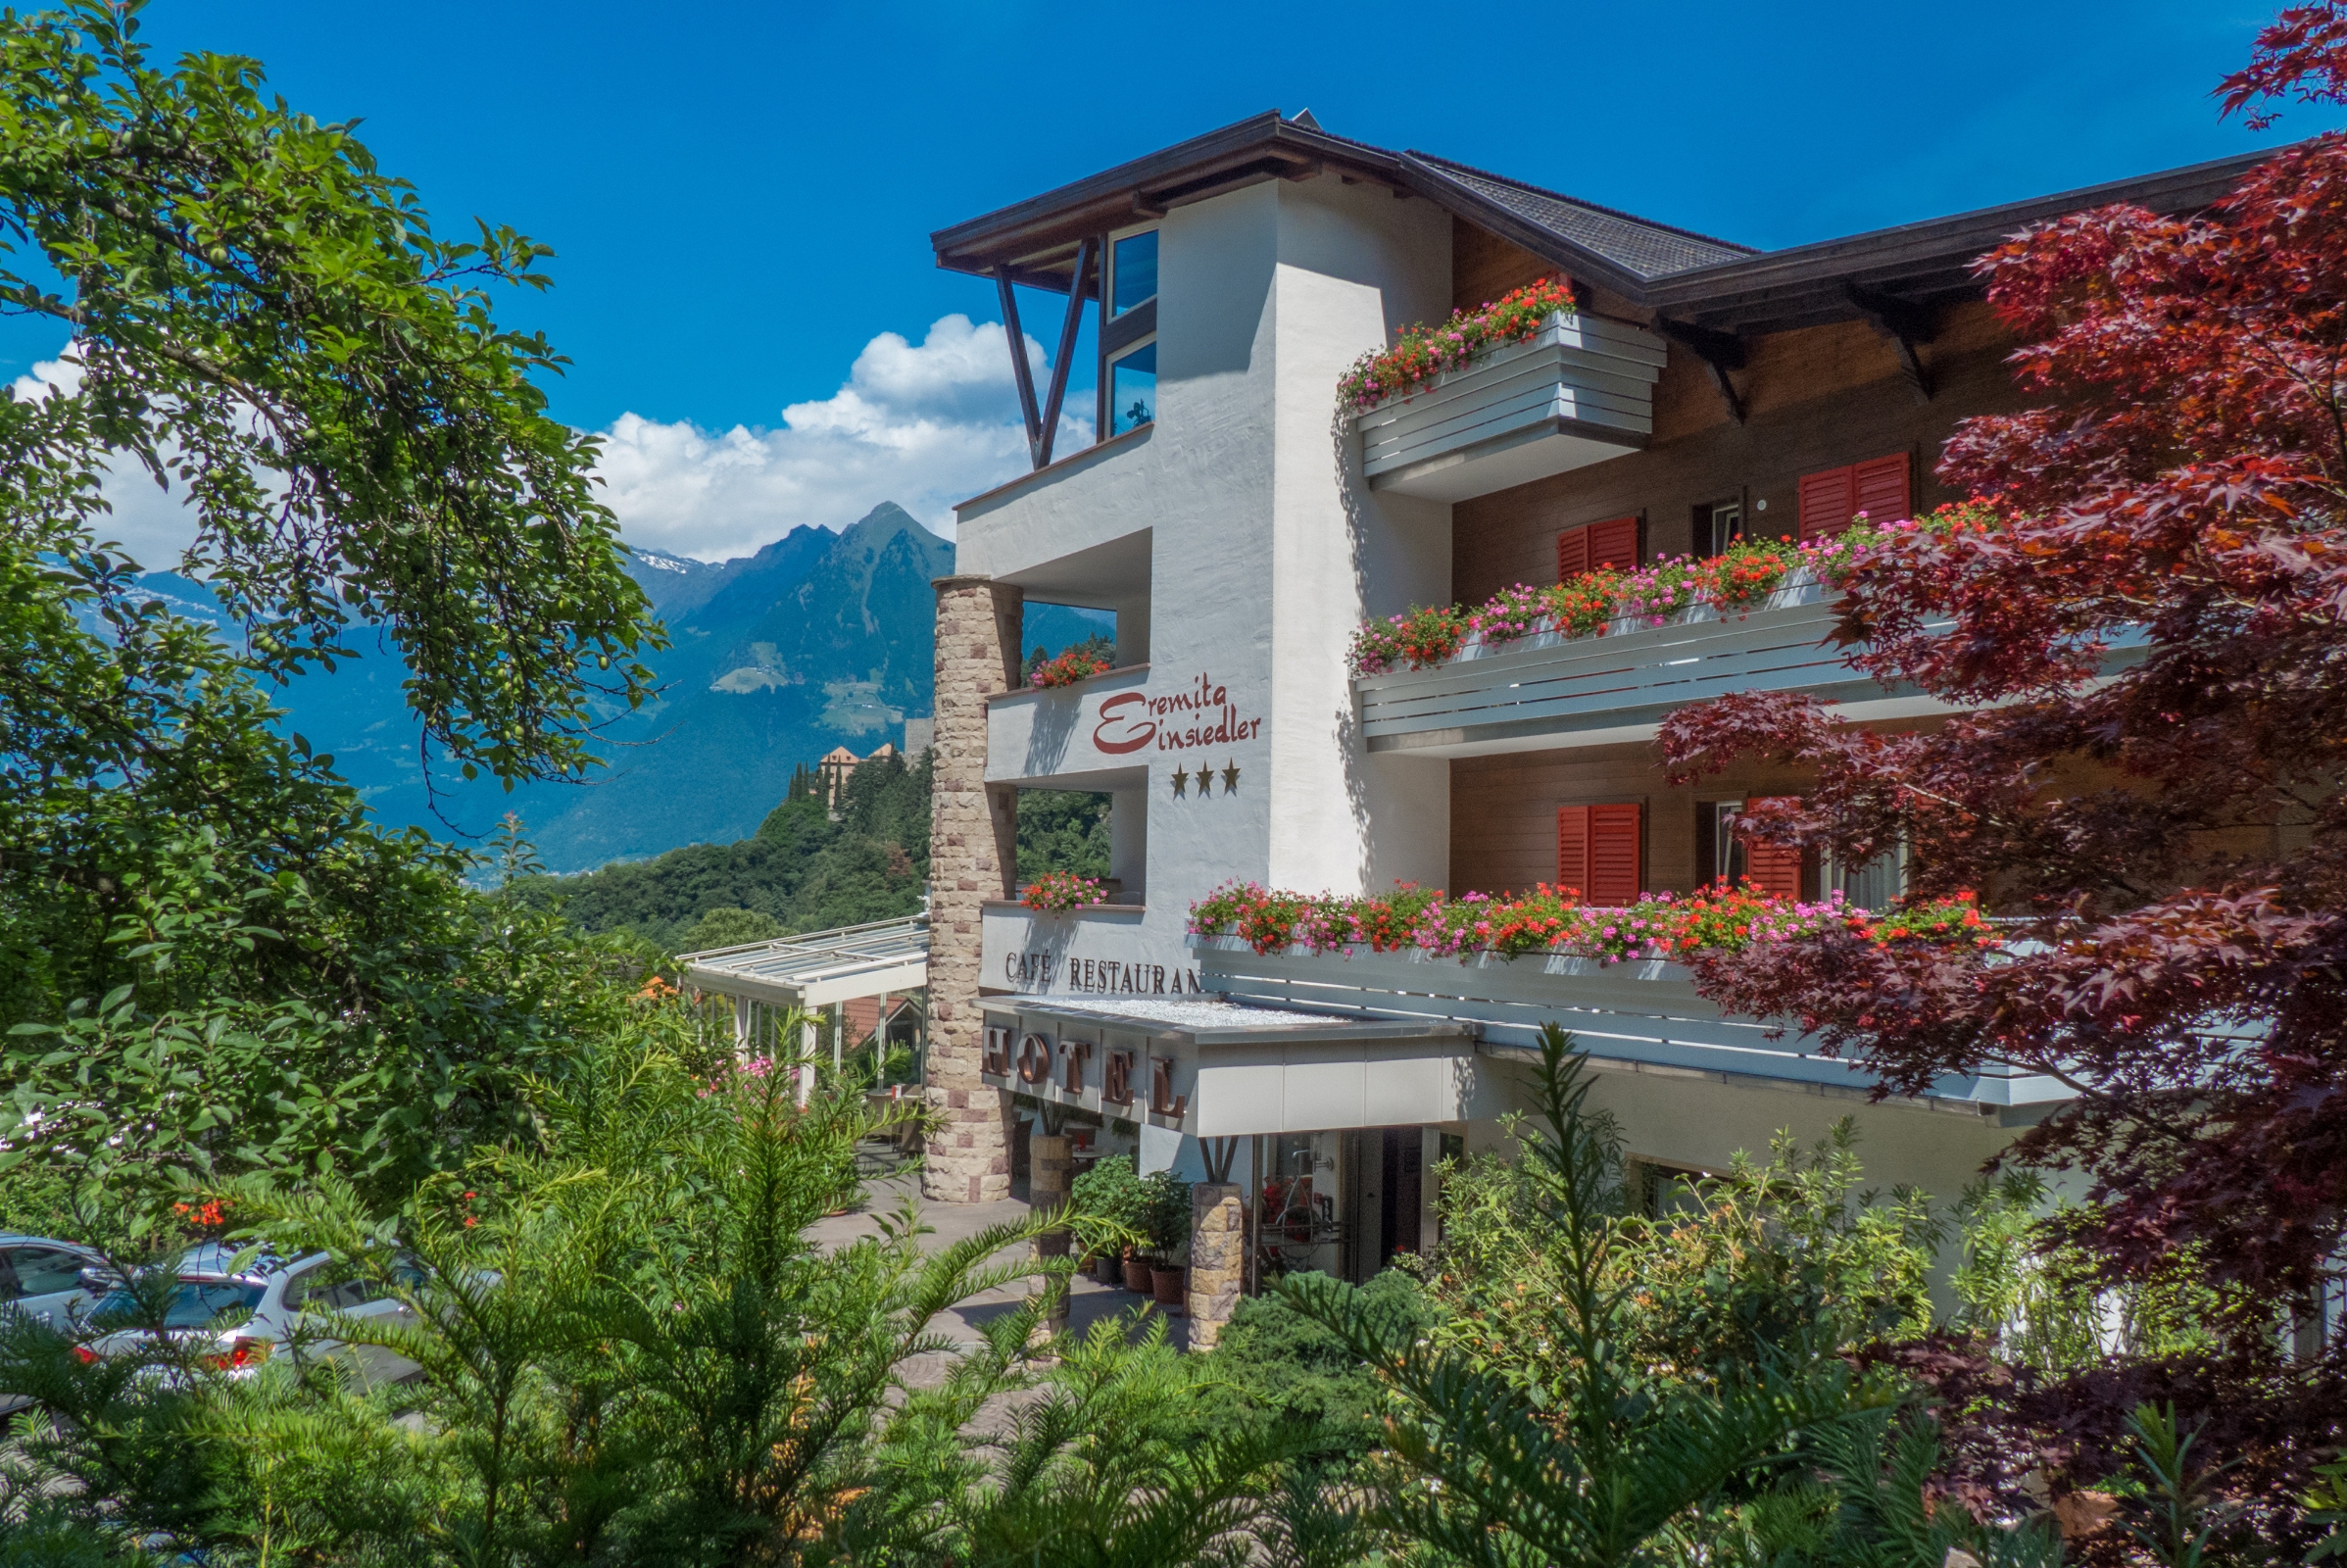 Hotel Einsiedler - 3 HRS star hotel in Merano (Trentino-Alto Adige)